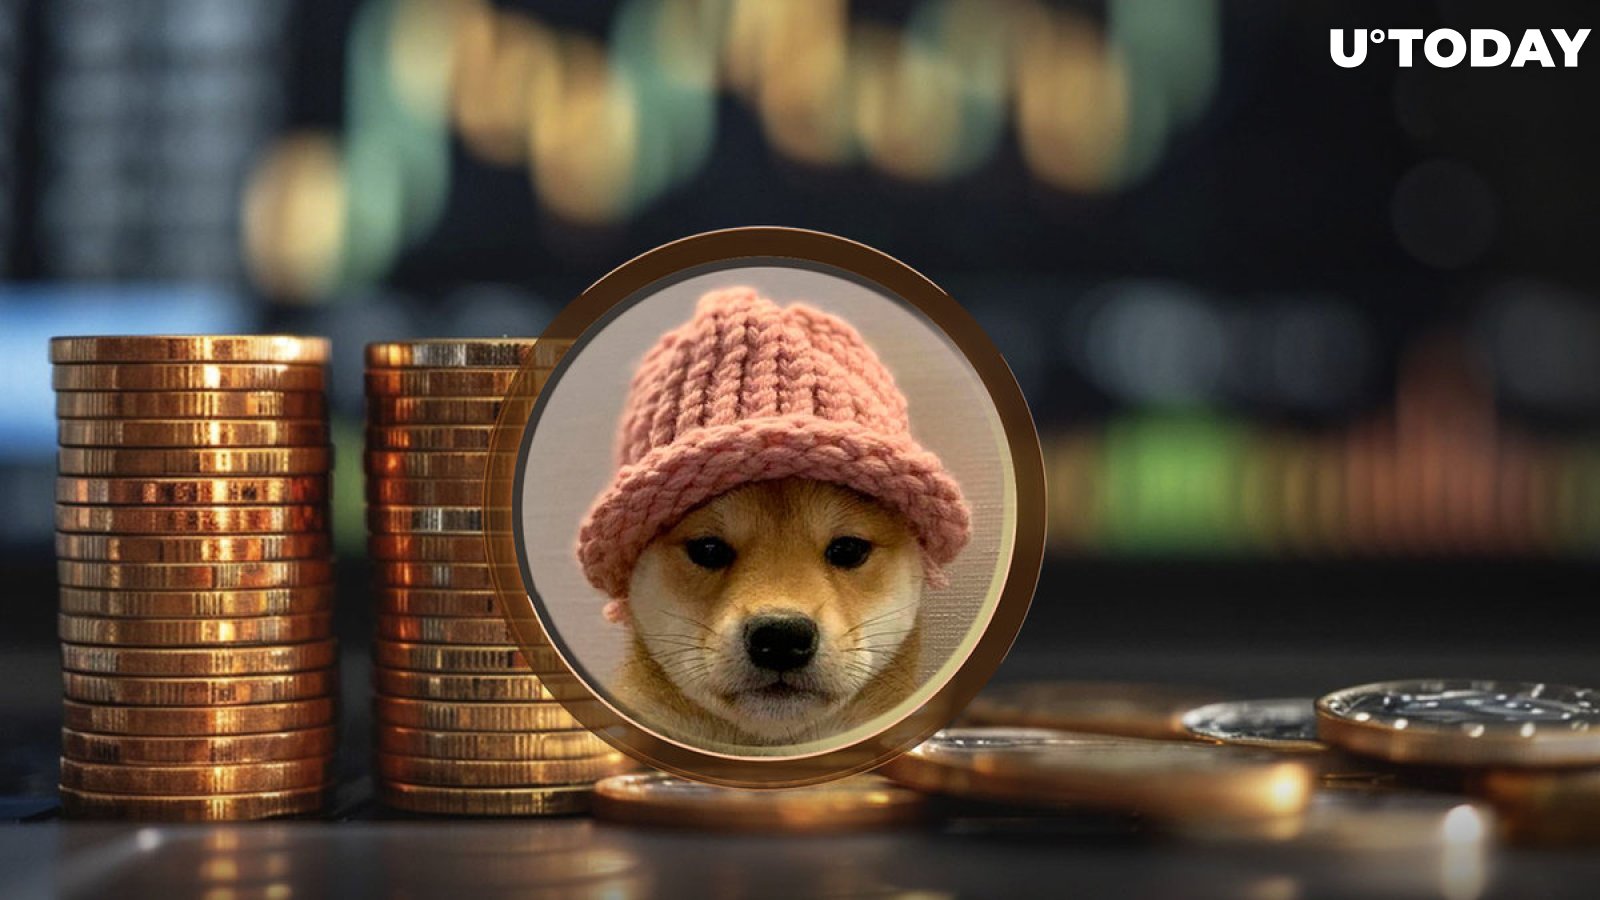 $1,300,000,000: Solana Meme Coin Dogwifhat (WIF) reached a major milestone